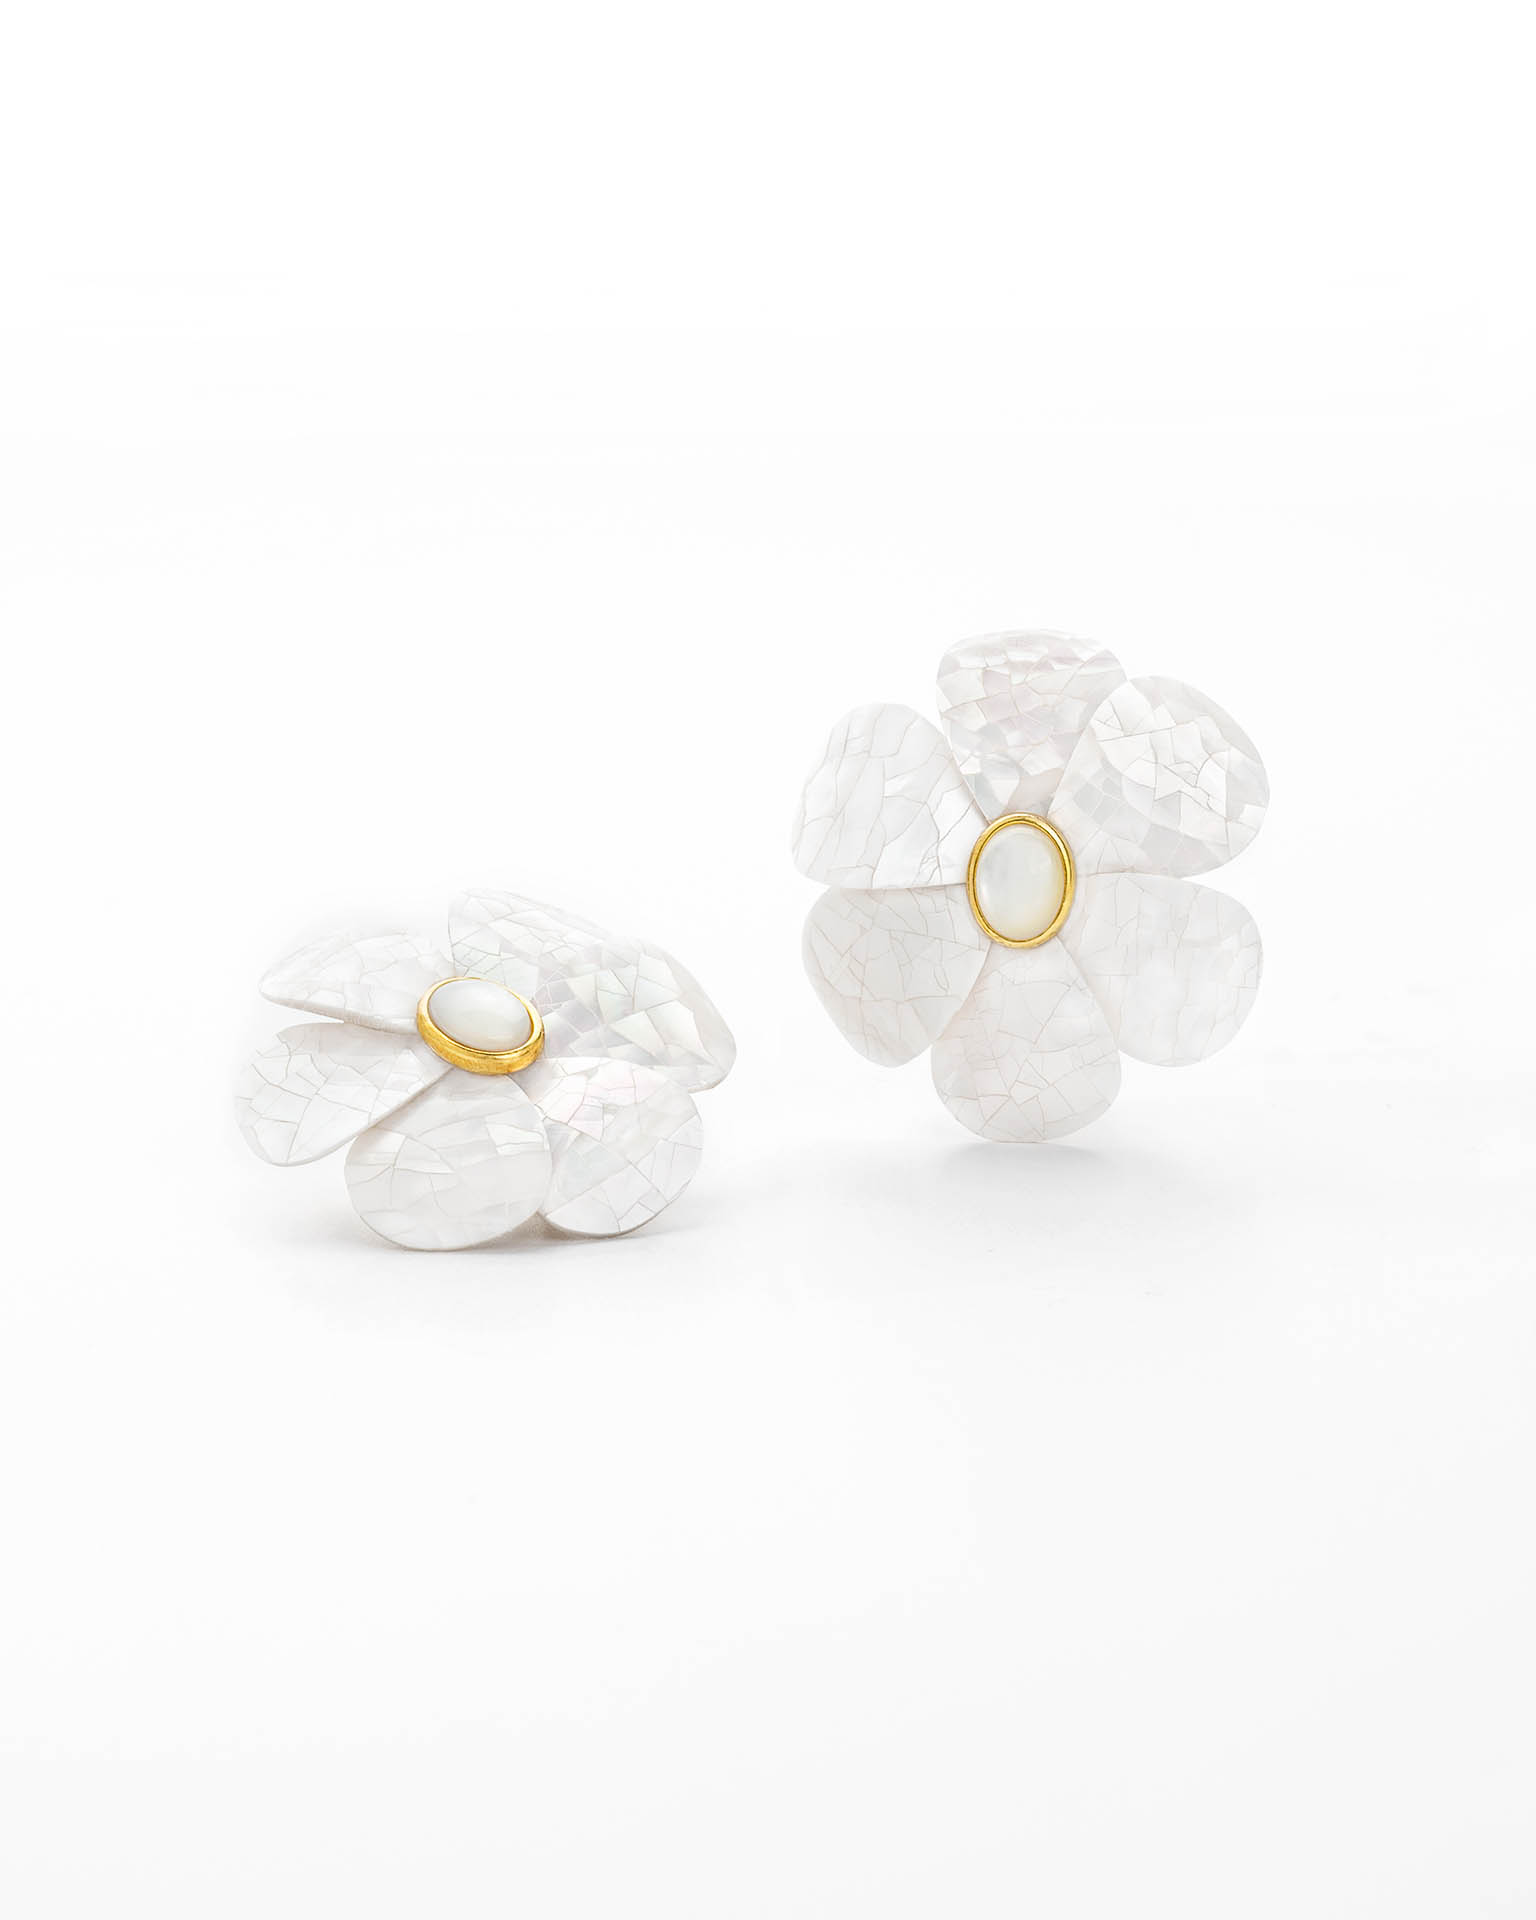 VIVARA Earrings - SONNIA Jewellery Design